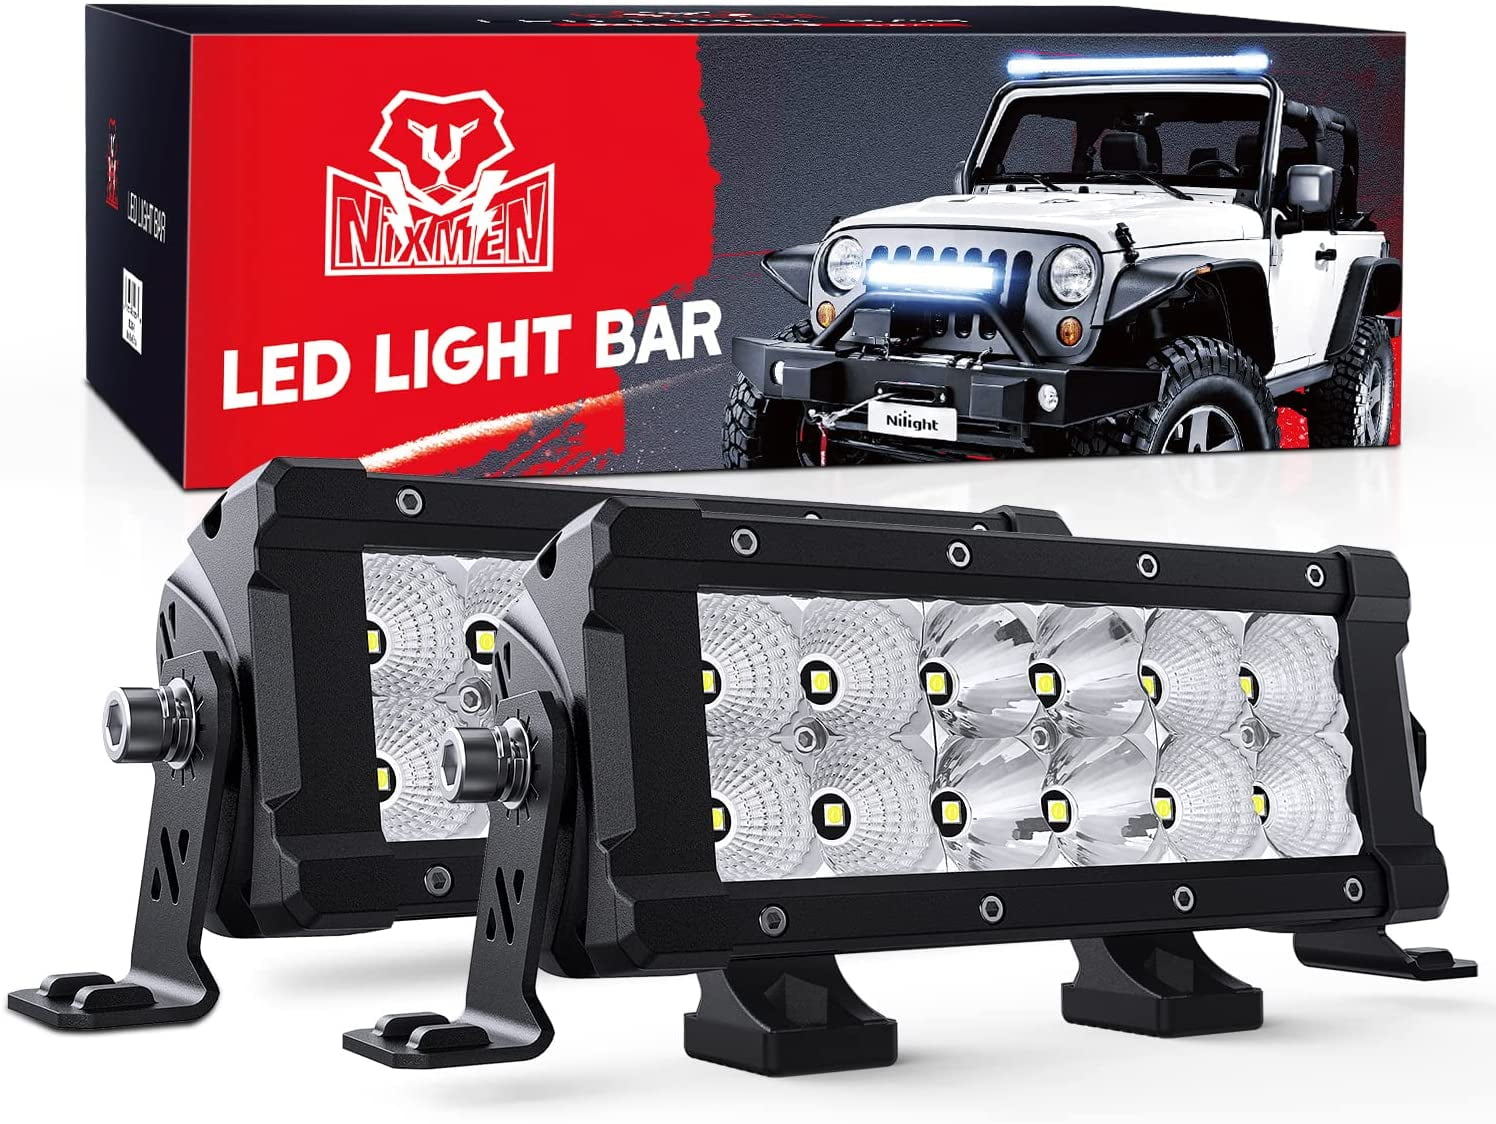 4 Inch 7D LED Light Bar 20W Off Road LED Bar Work Light Pods